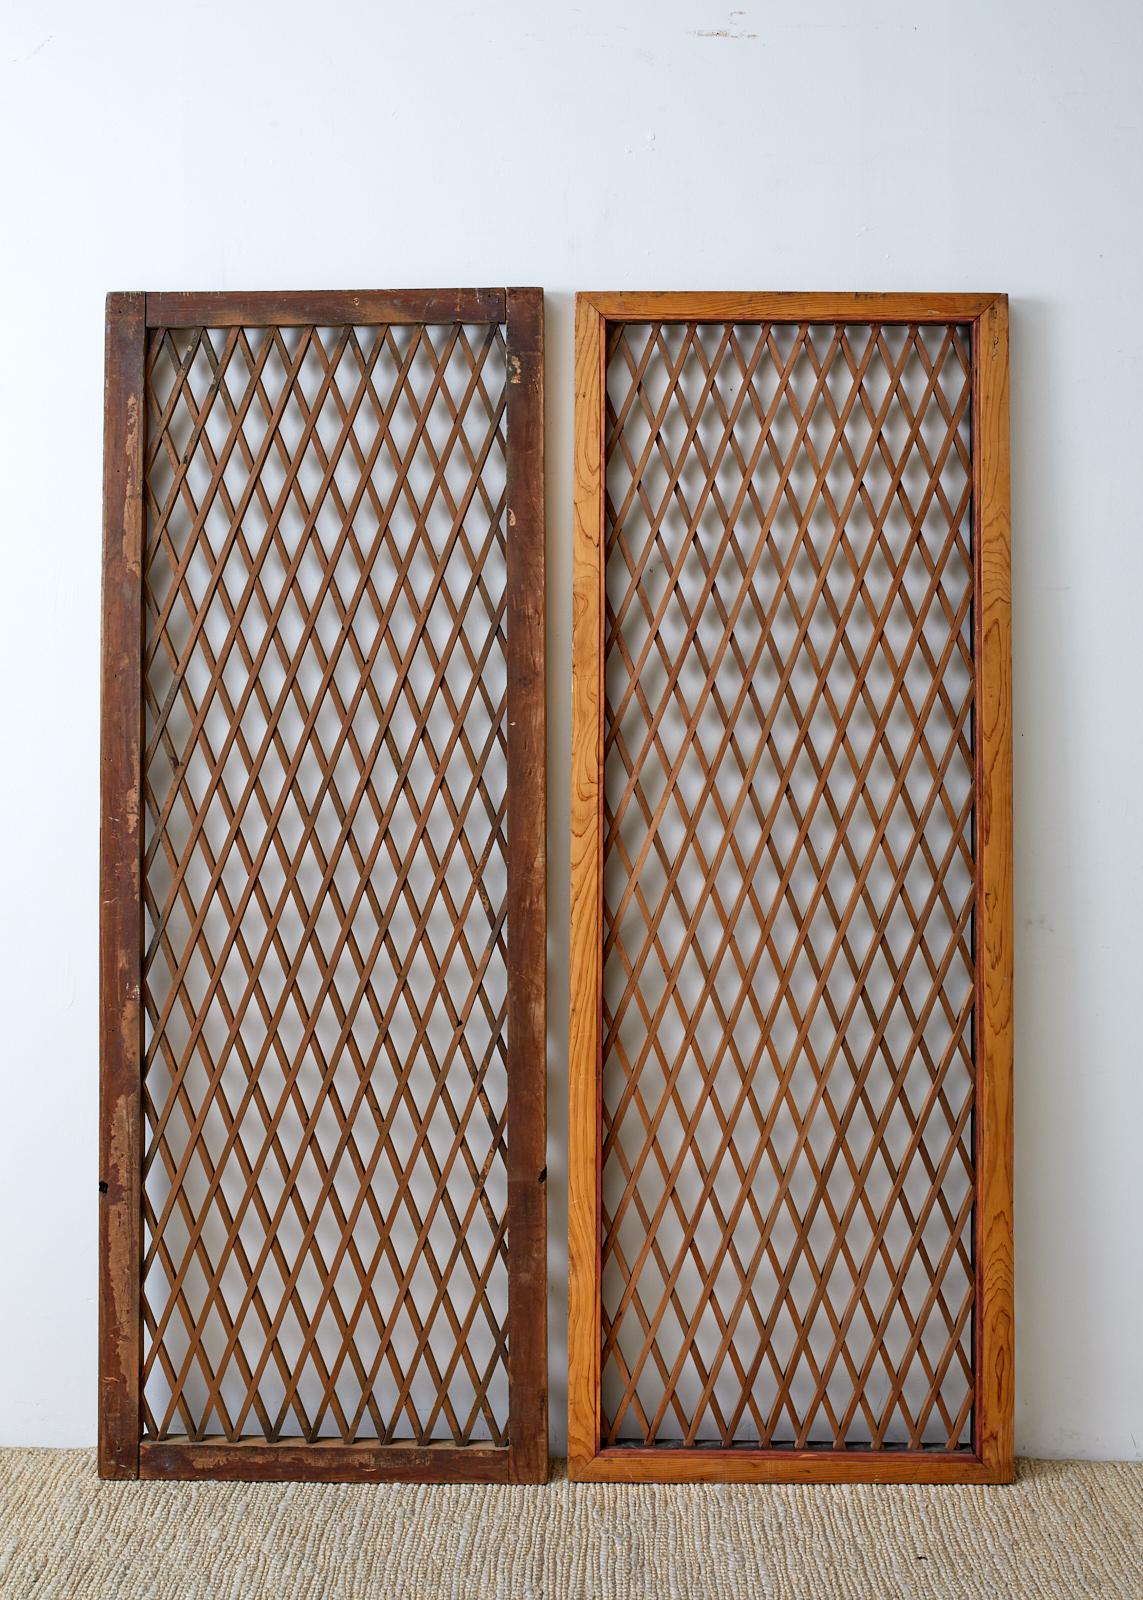 Pair of Chinese Geometric Lattice Window Panels For Sale 2